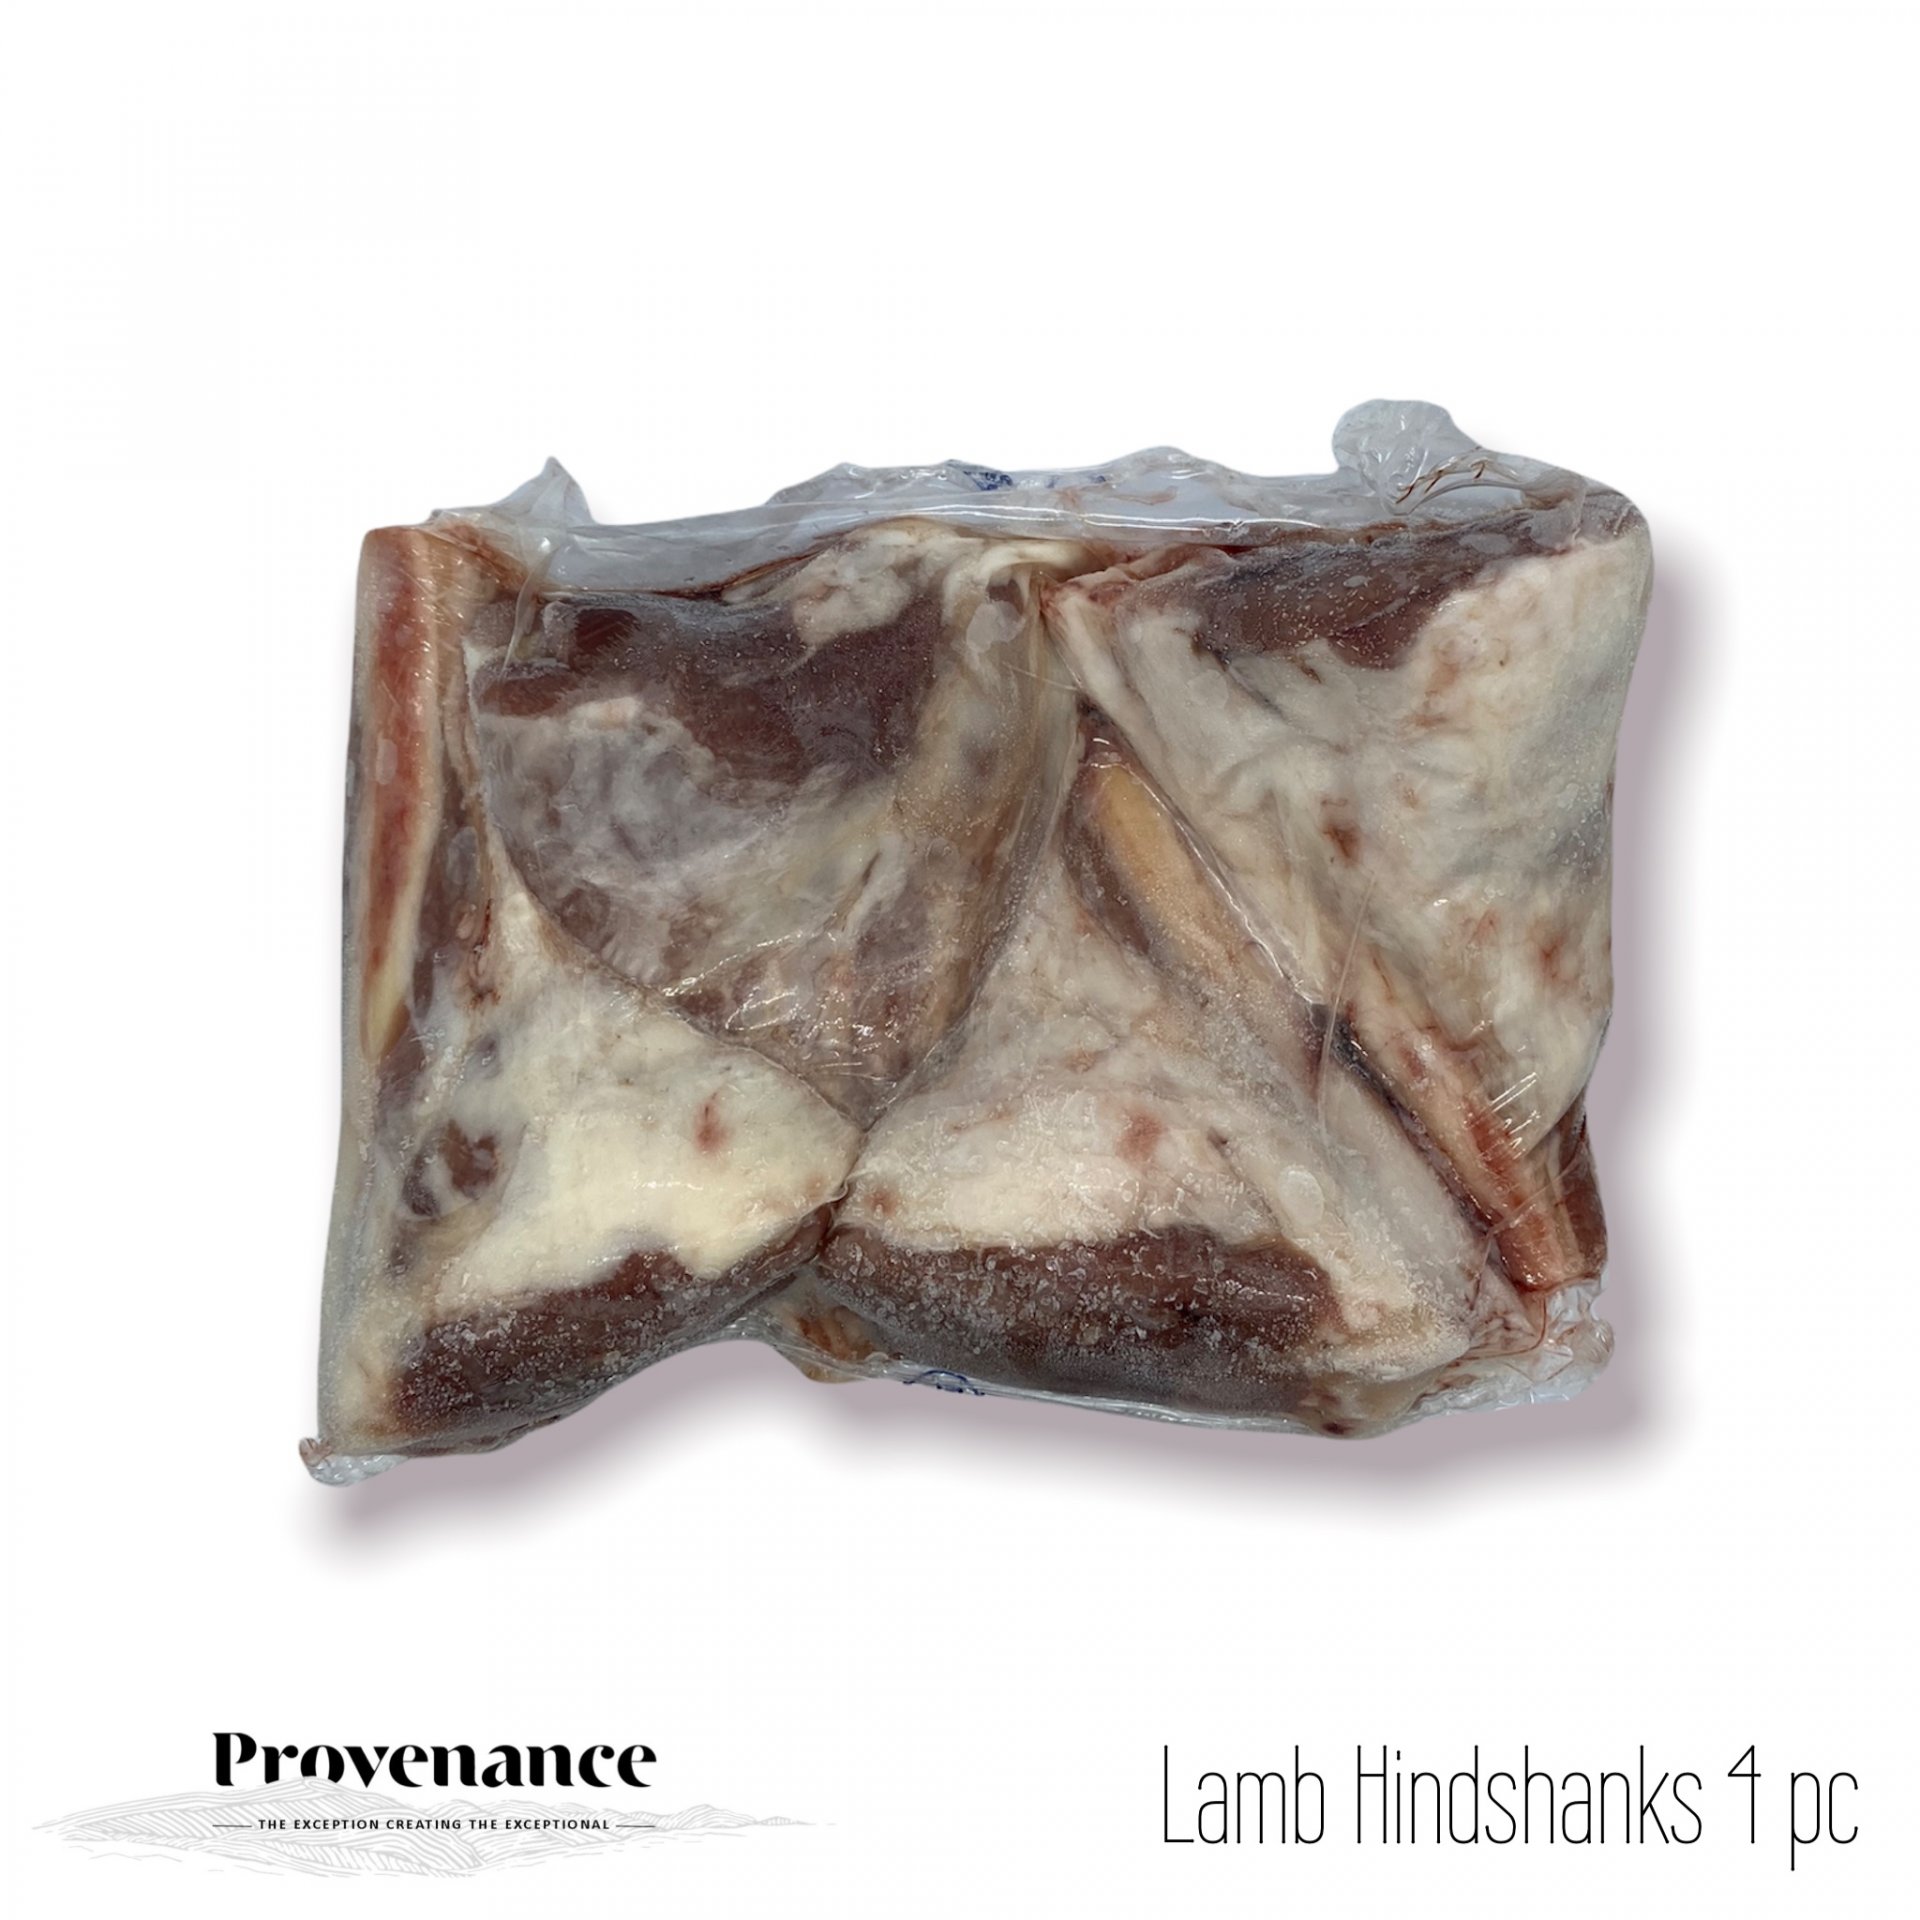 NZ Lamb Hindshanks 4pc (1.5-1.8kg)